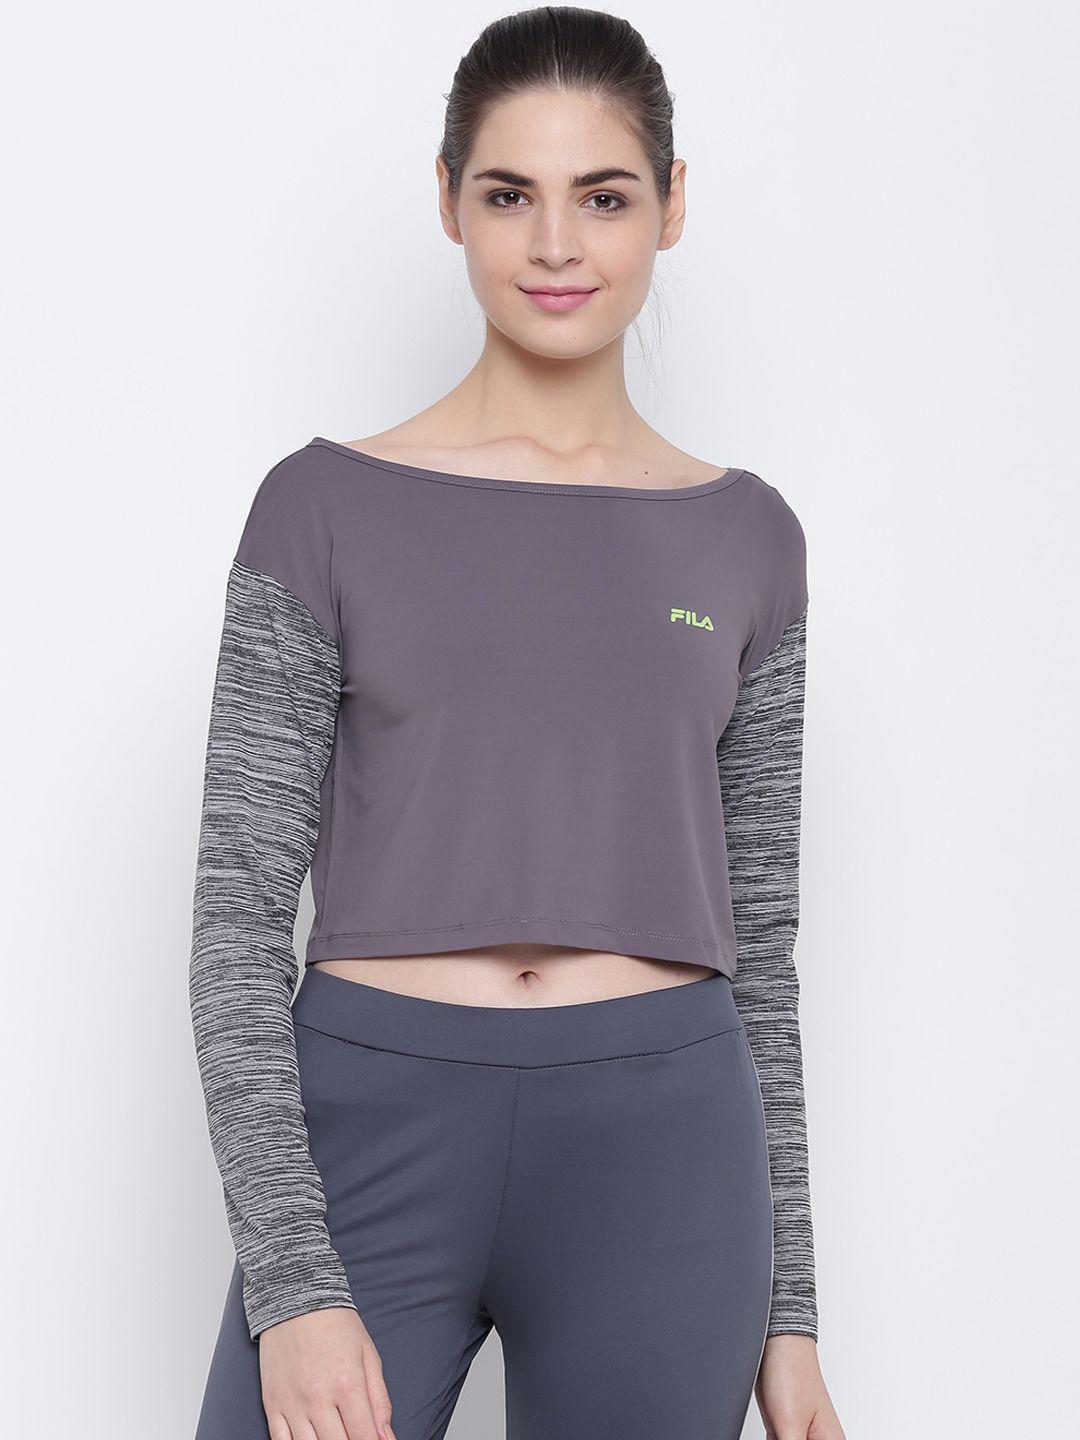 fila-women-grey-printed-crop-top